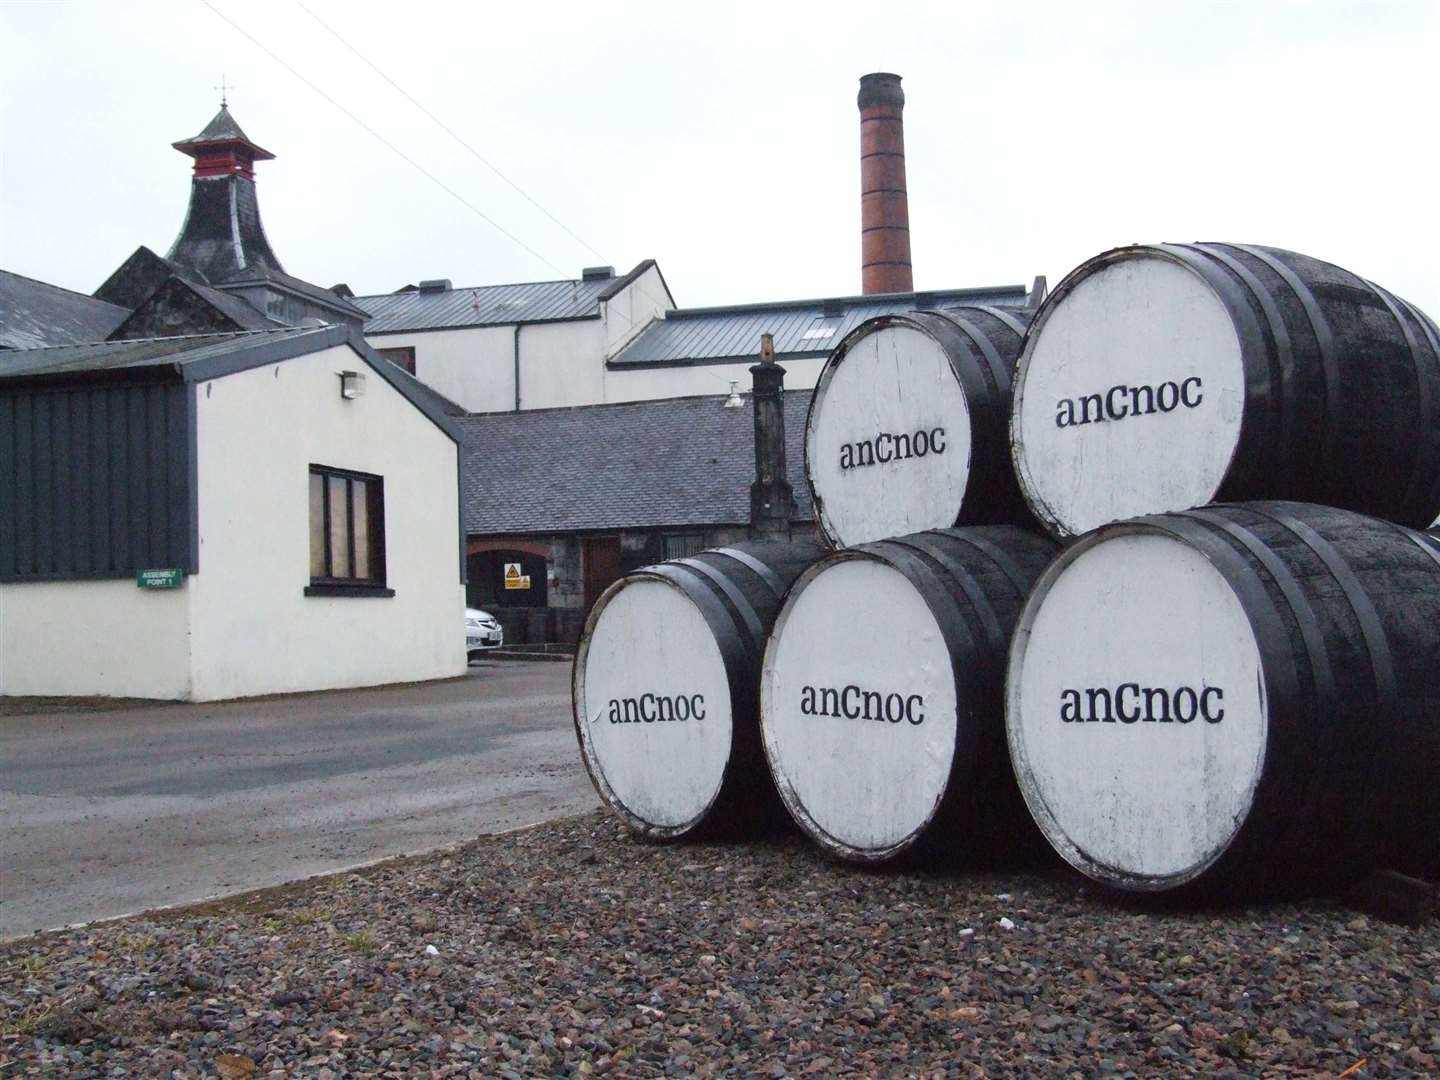 Knockdhu Distillery. Photo by Ian Rennie